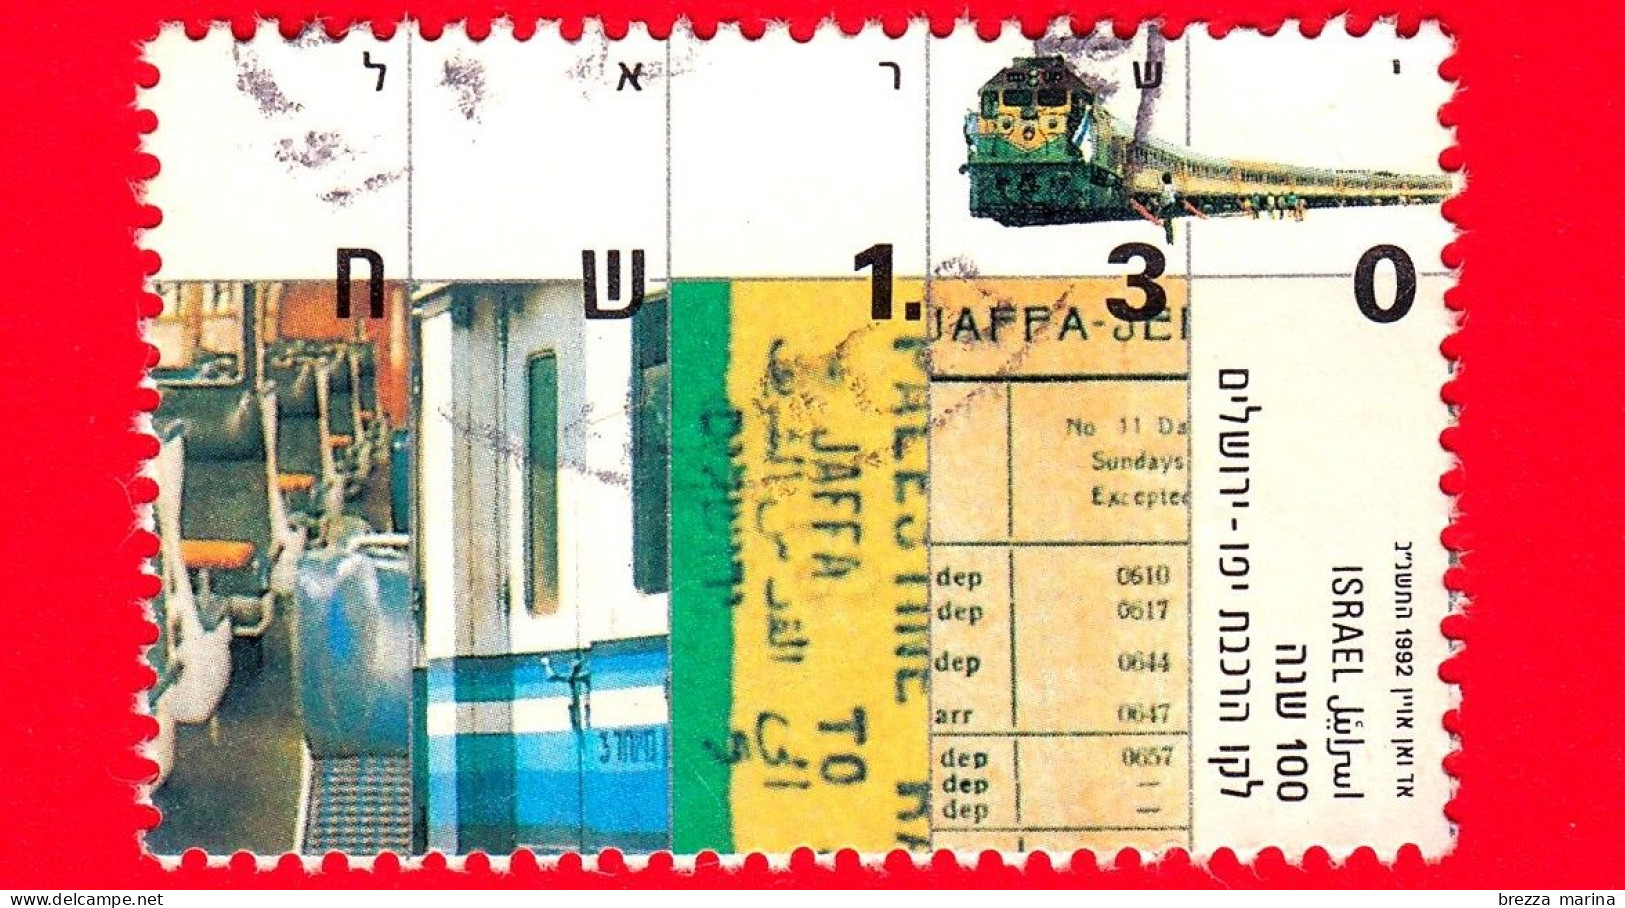 ISRAELE - Usato - 1992 - Centenario Della Linea Ferroviaria Jaffa-Gerusalemme - Locomotiva Diesel - 1.30 - Usati (senza Tab)